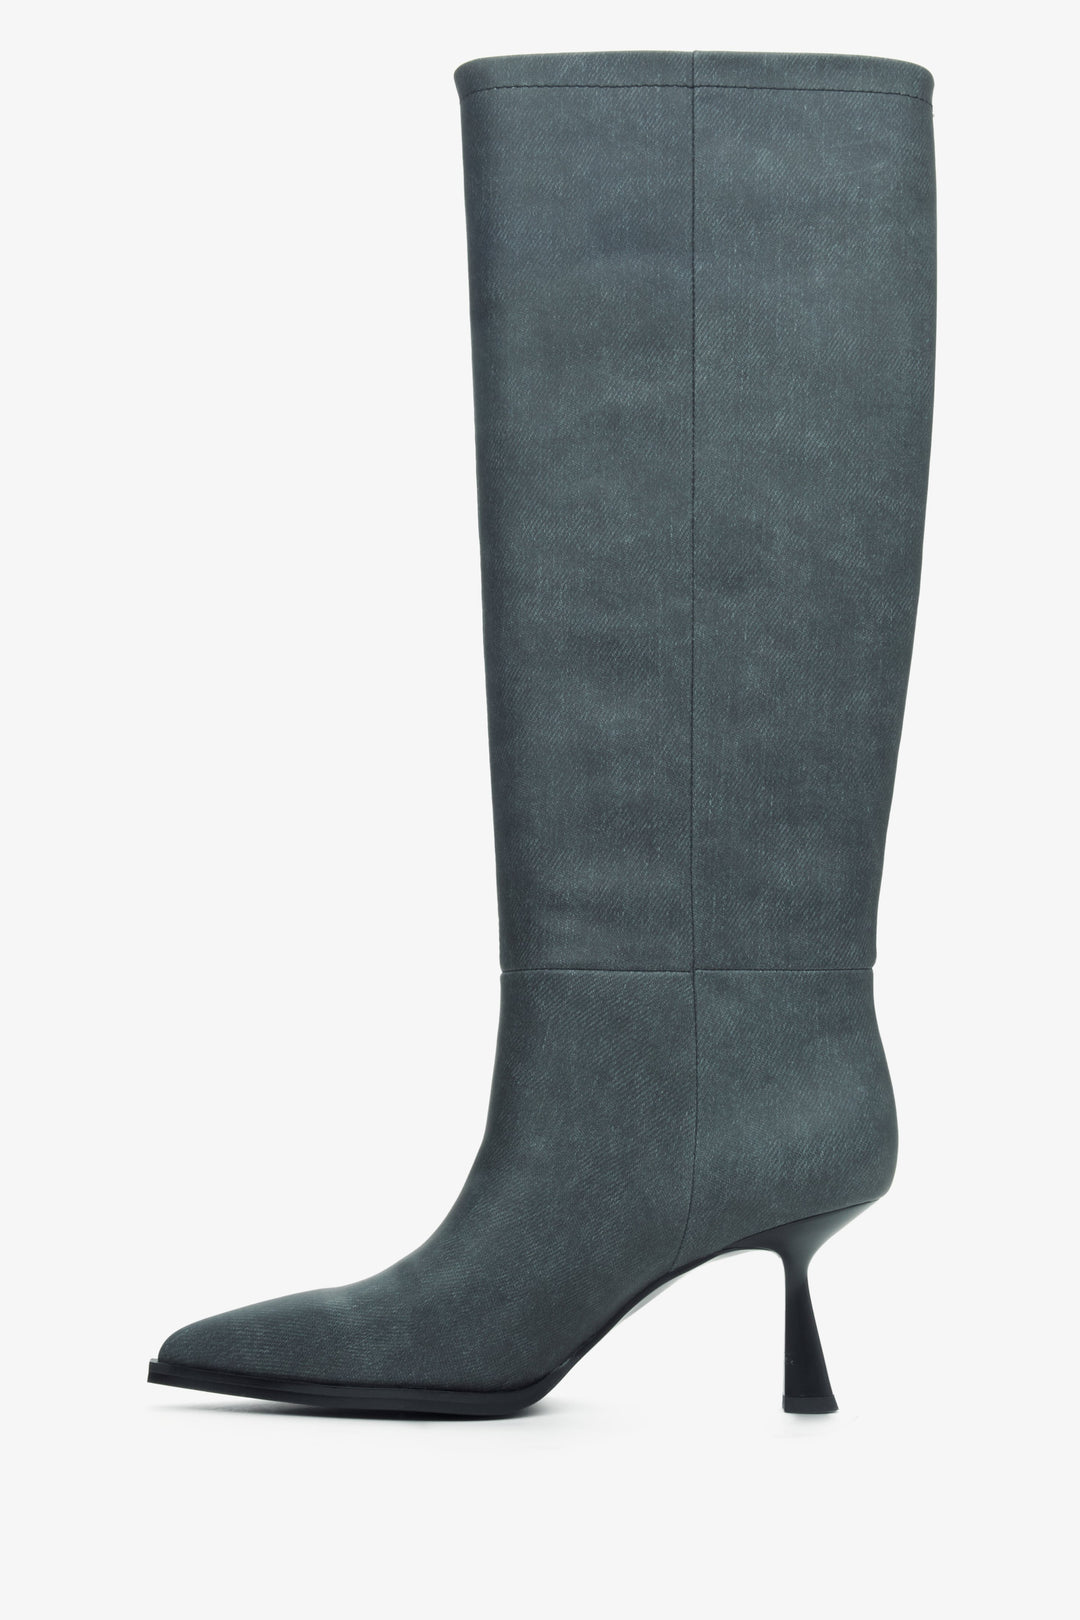 Grey high-heel women's boots with a cone heel by Estro - shoe profile.